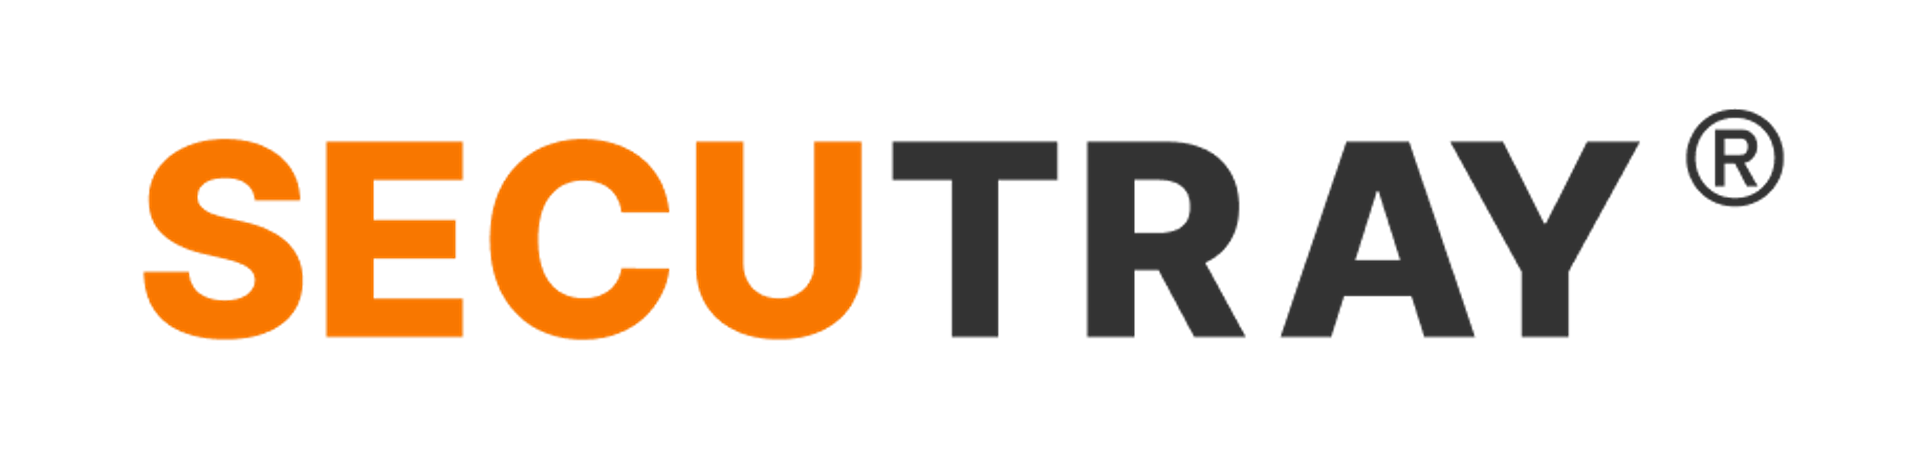 SecuTray GmbH Logo